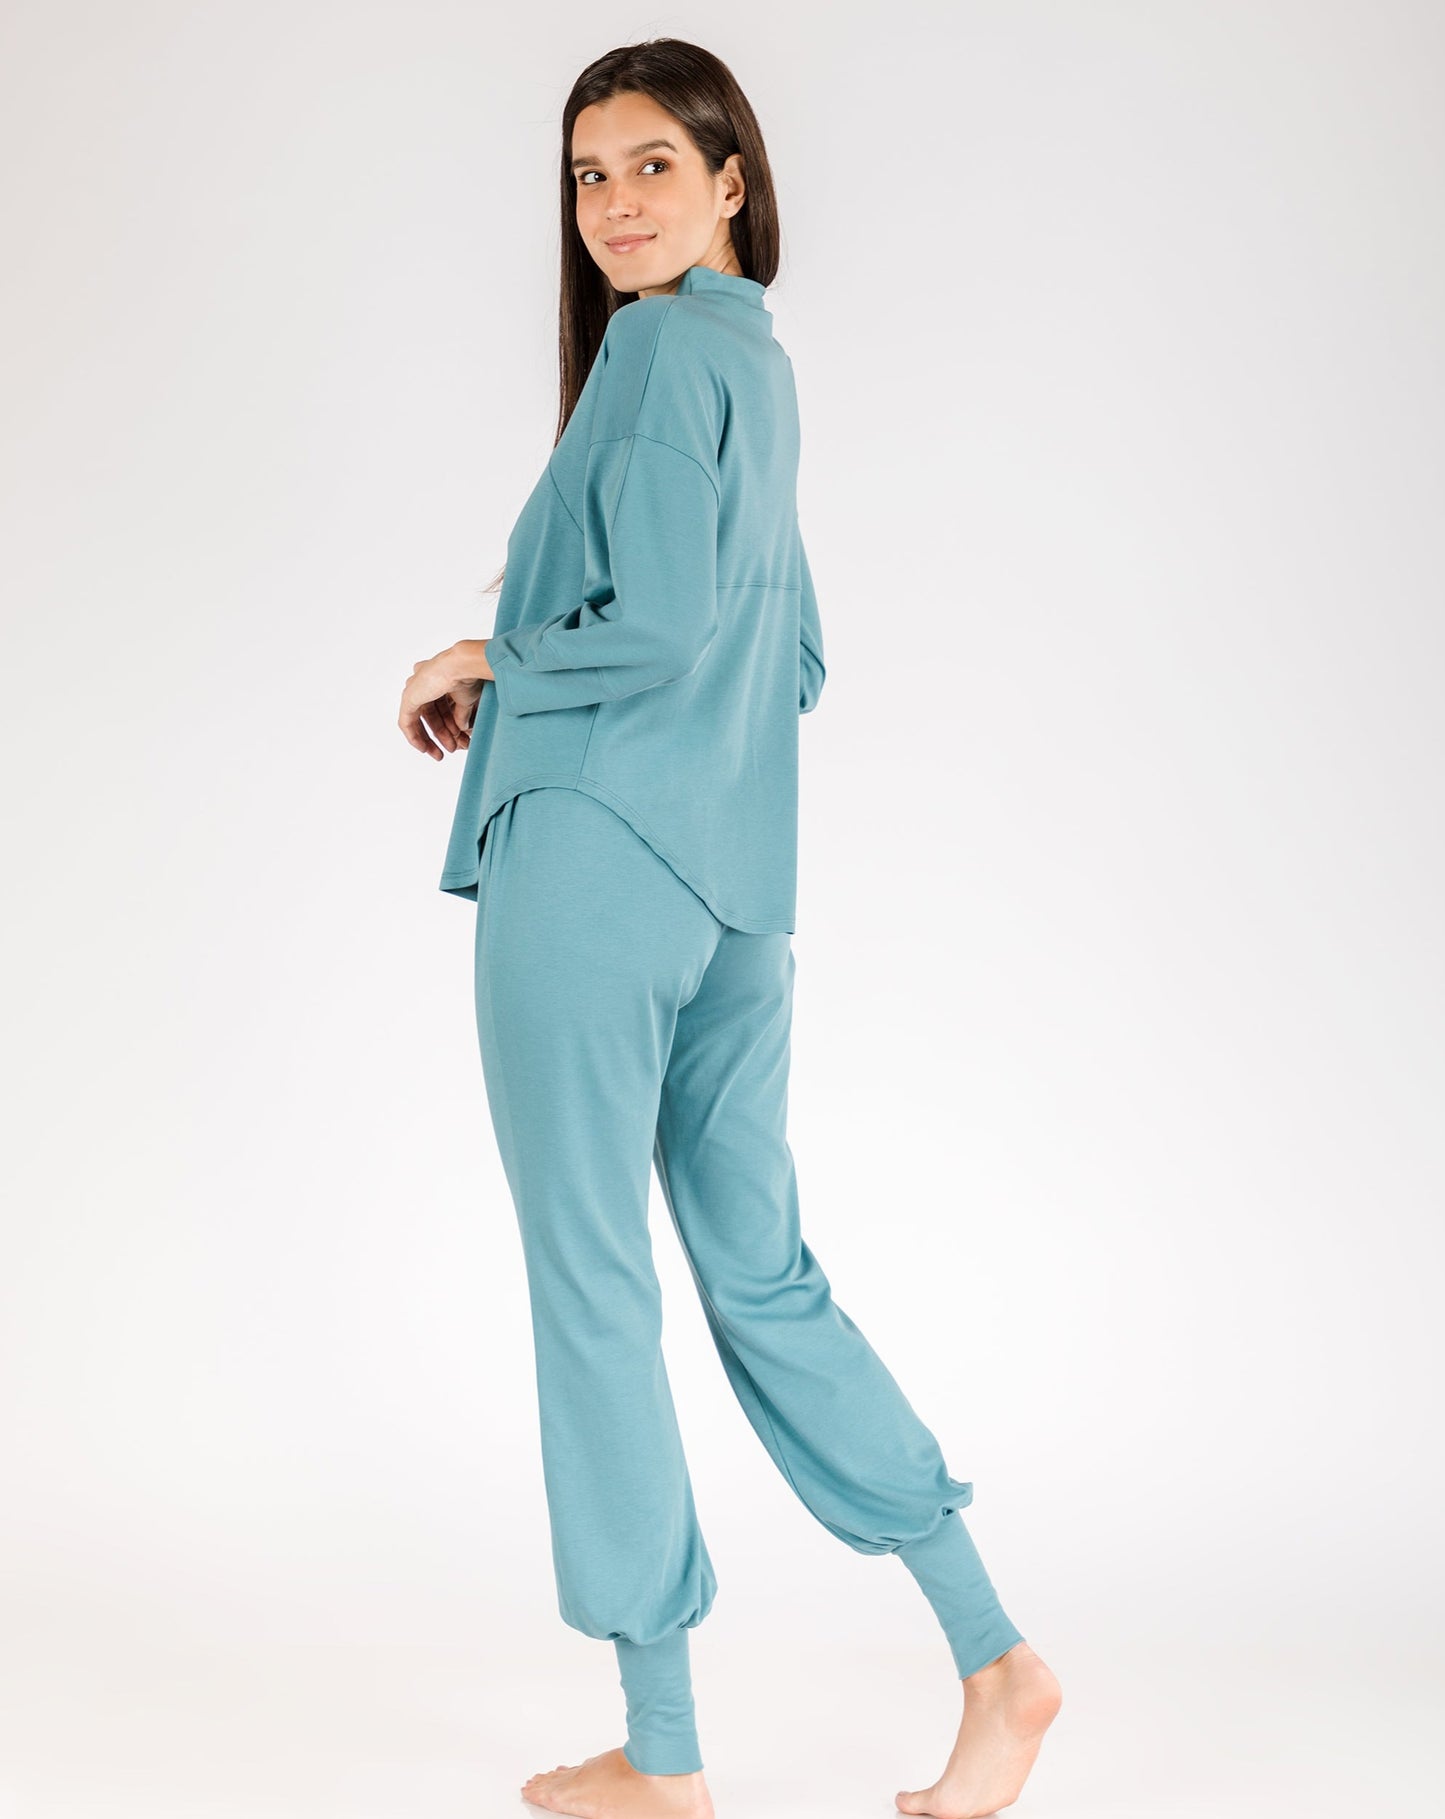 women_s-pajama-set-Sweatpant-and-long-cami-storm blue-Lavender-Dreams